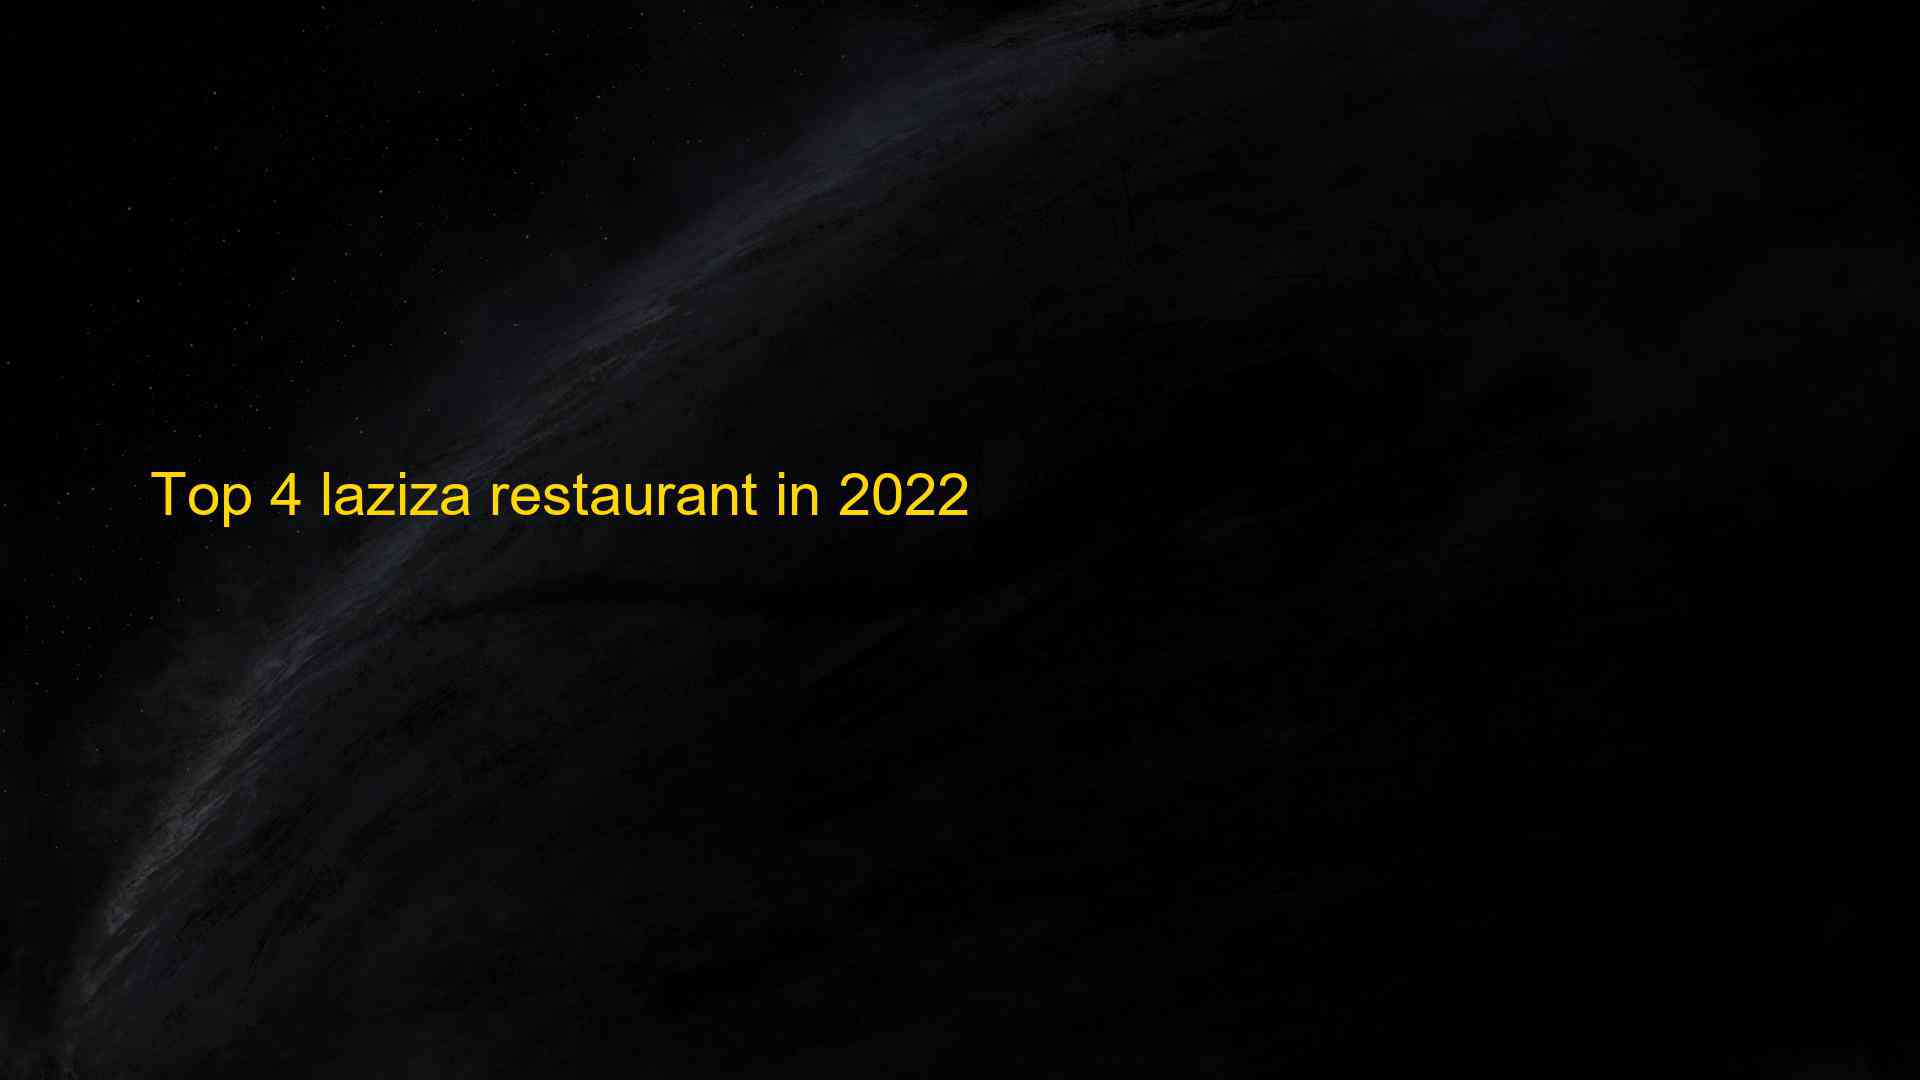 Top 4 laziza restaurant in 2022 1663410193